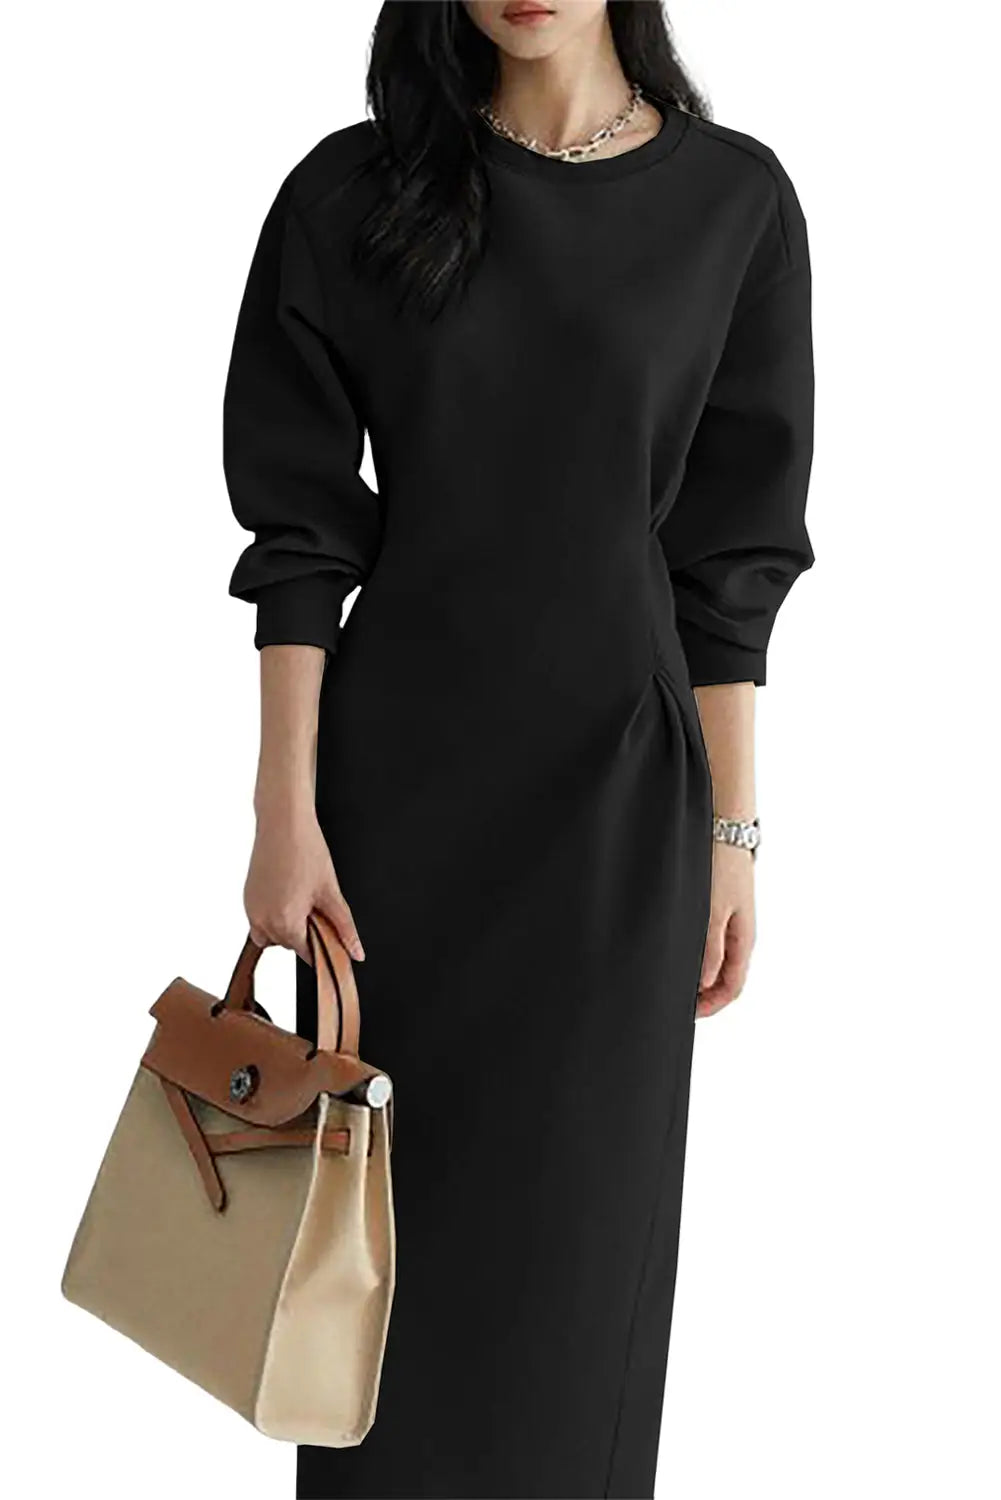 Black solid color cinched waist long sleeve maxi dress - dresses